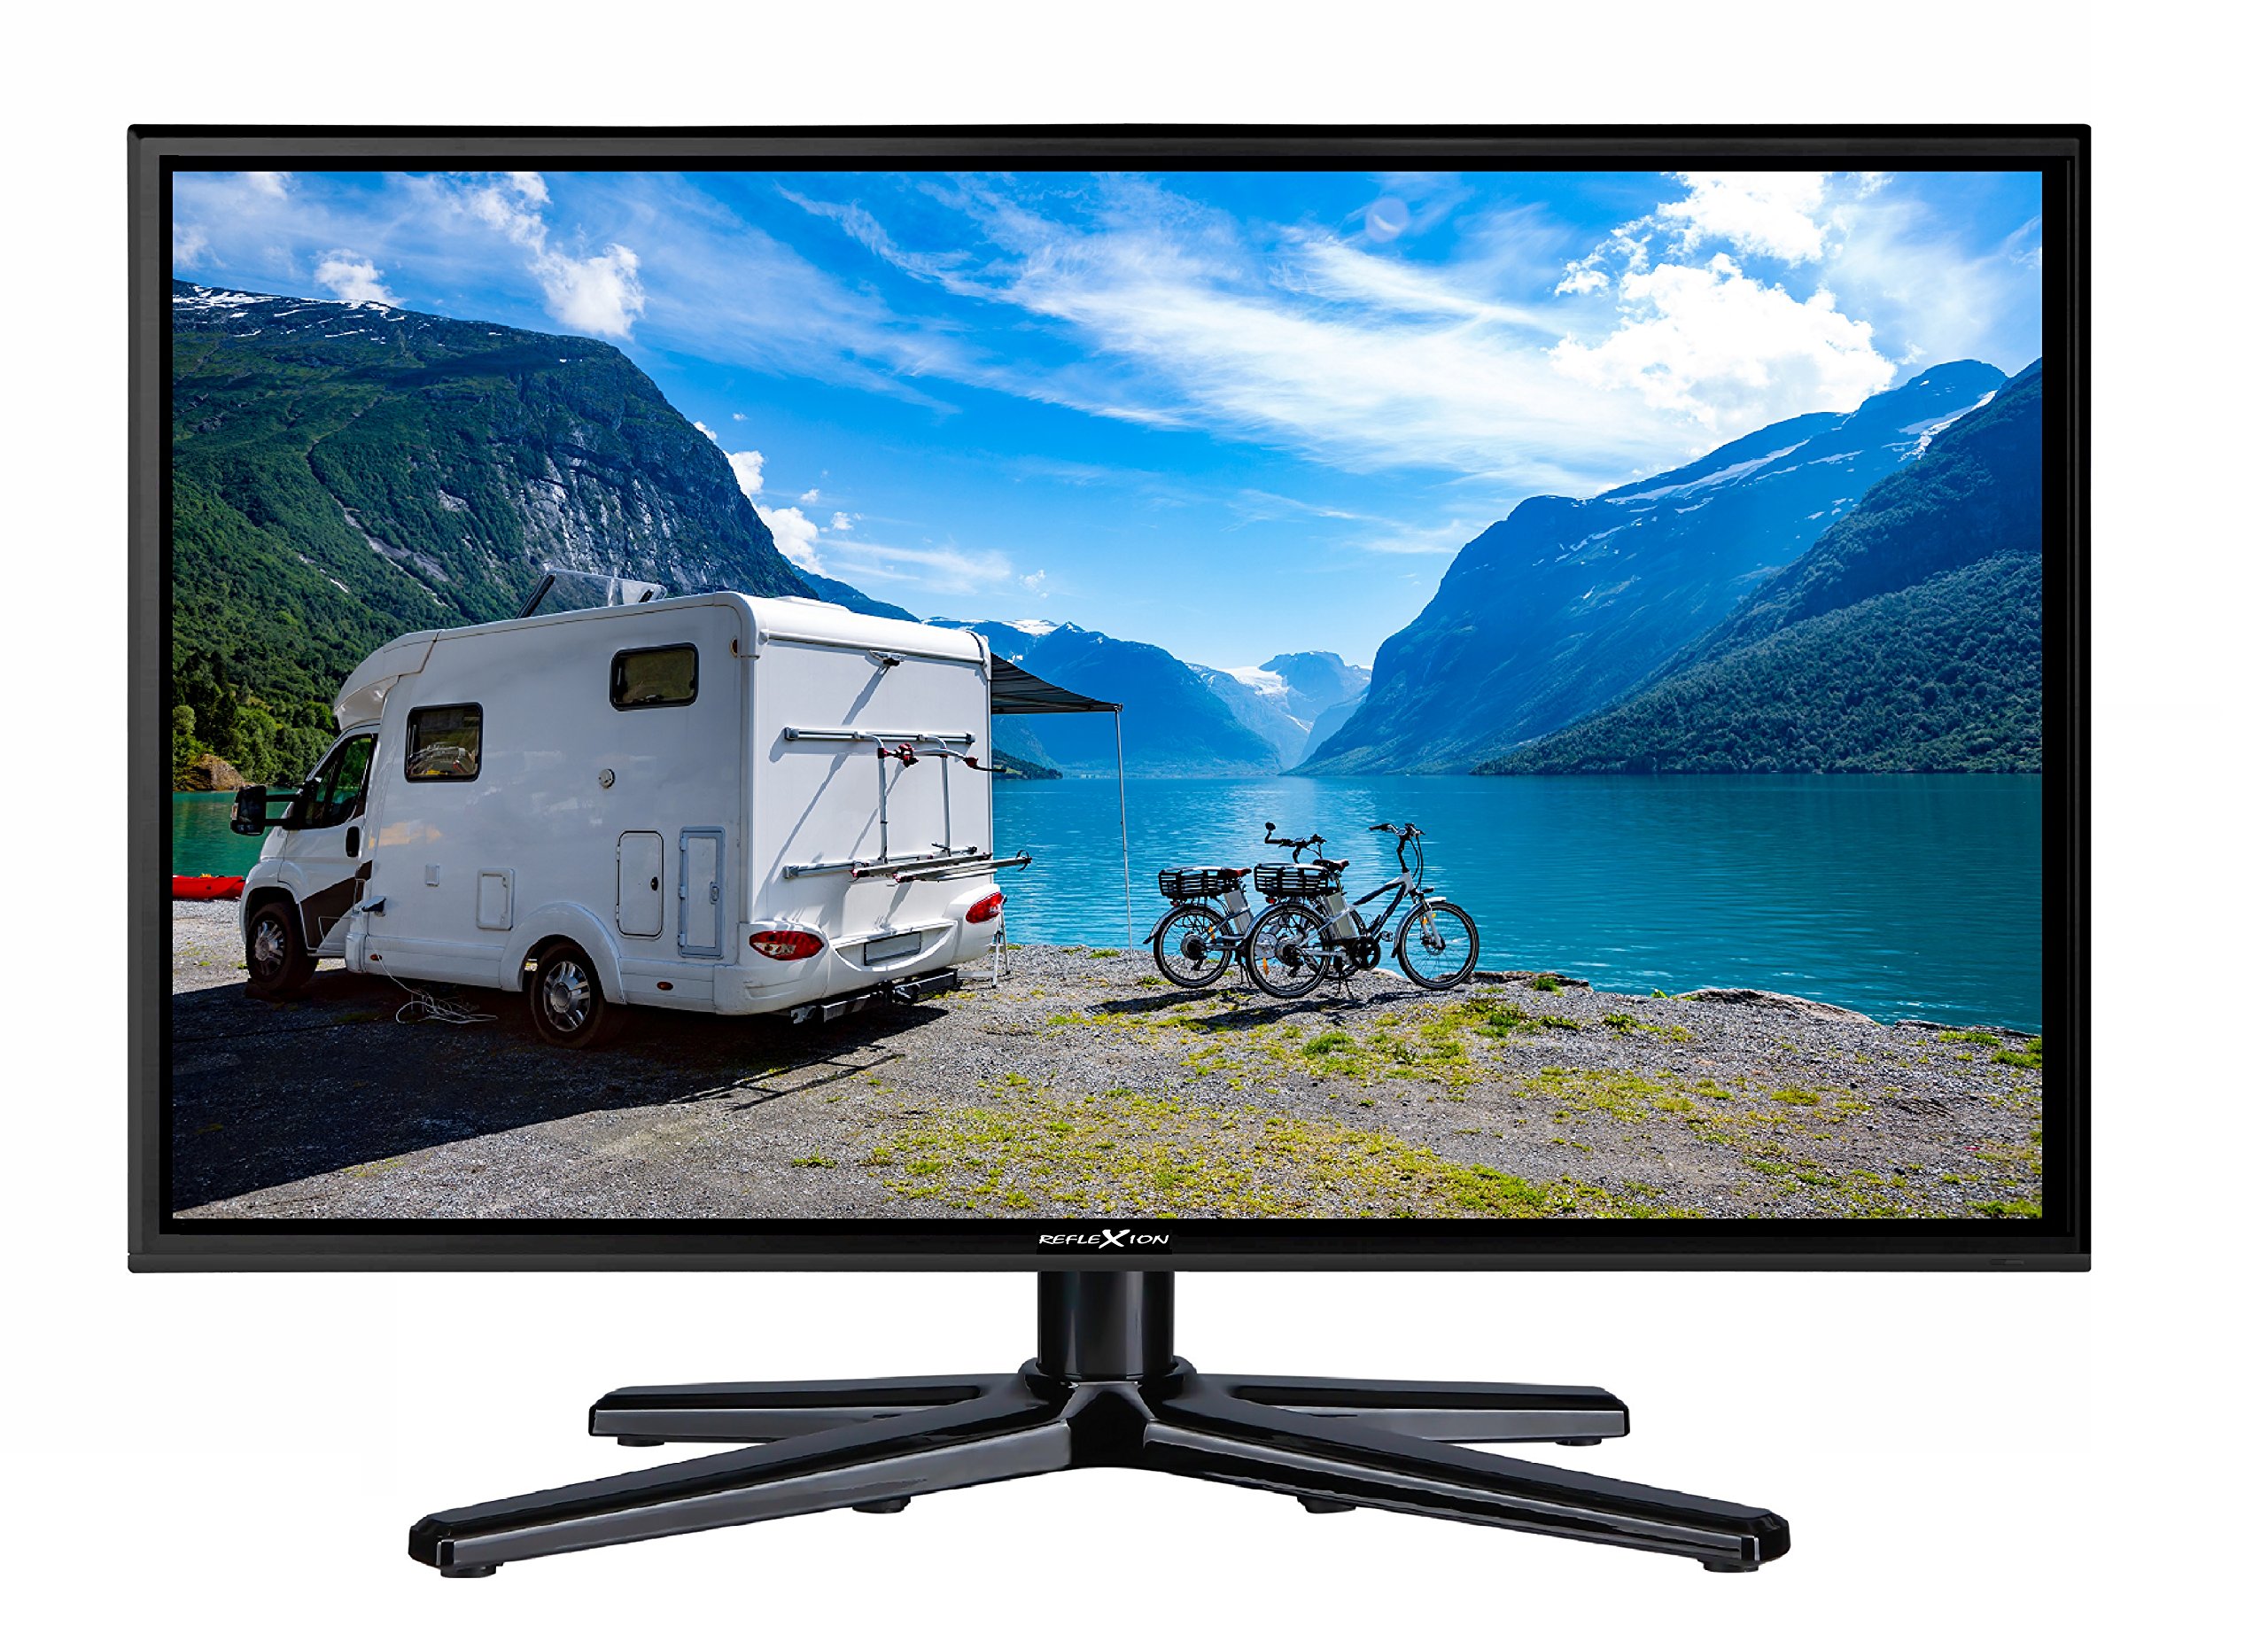 Reflexion LEDW-22 Wide-Screen LED-Fernseher (22 Zoll) für Wohnmobile mit DVB-T2 HD, Triple-Tuner und 12 Volt Kfz-Adapter (12 V / 24 V, Full HD, HDMI, USB, EPG, CI+, DVB-T Antenne), schwarz